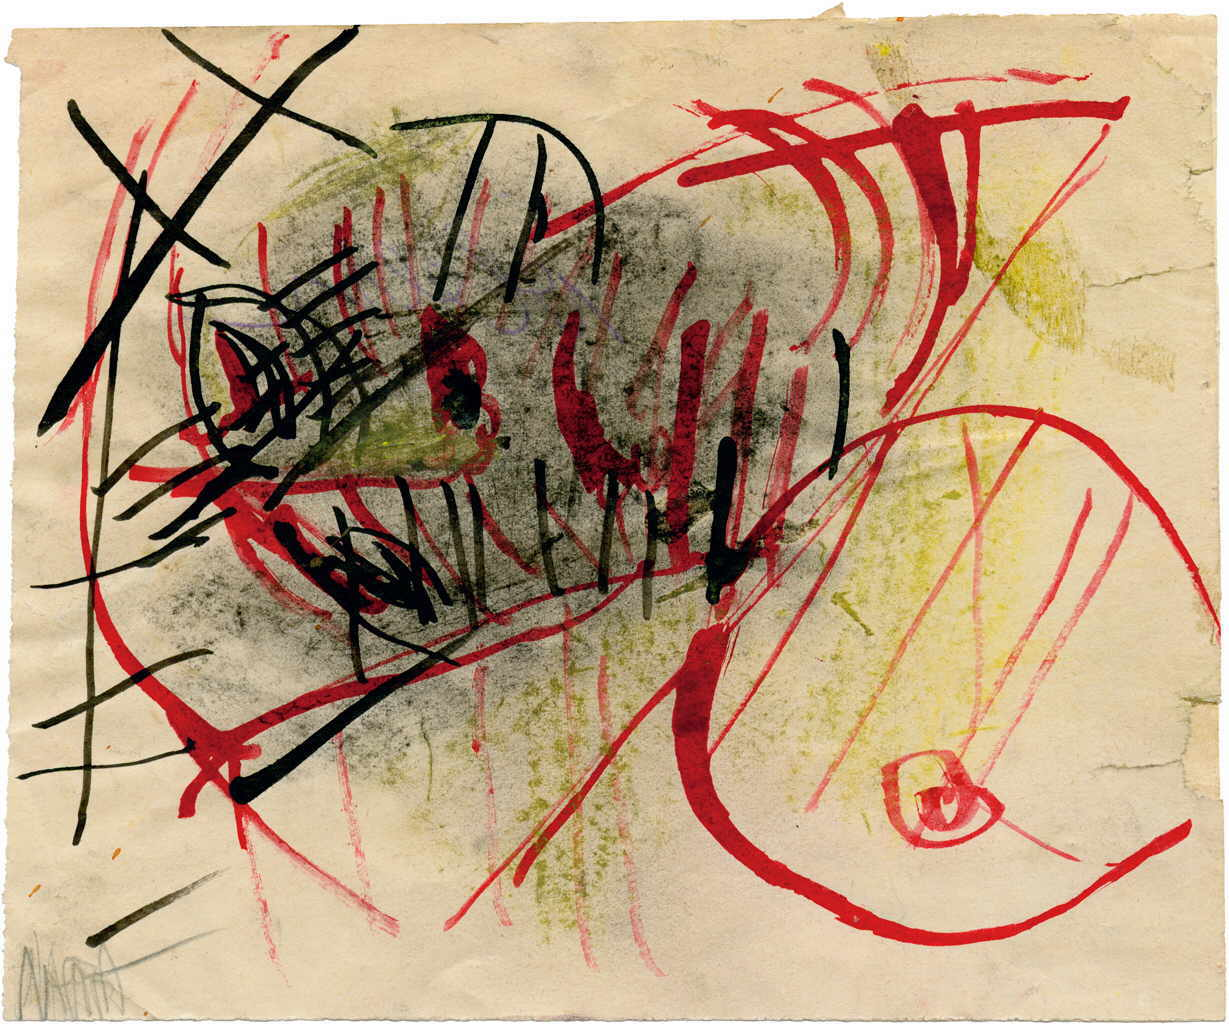 Kerschbaumer Martha C. 
"Torso", 
tinta, gouache / papel
15 x 19 cm